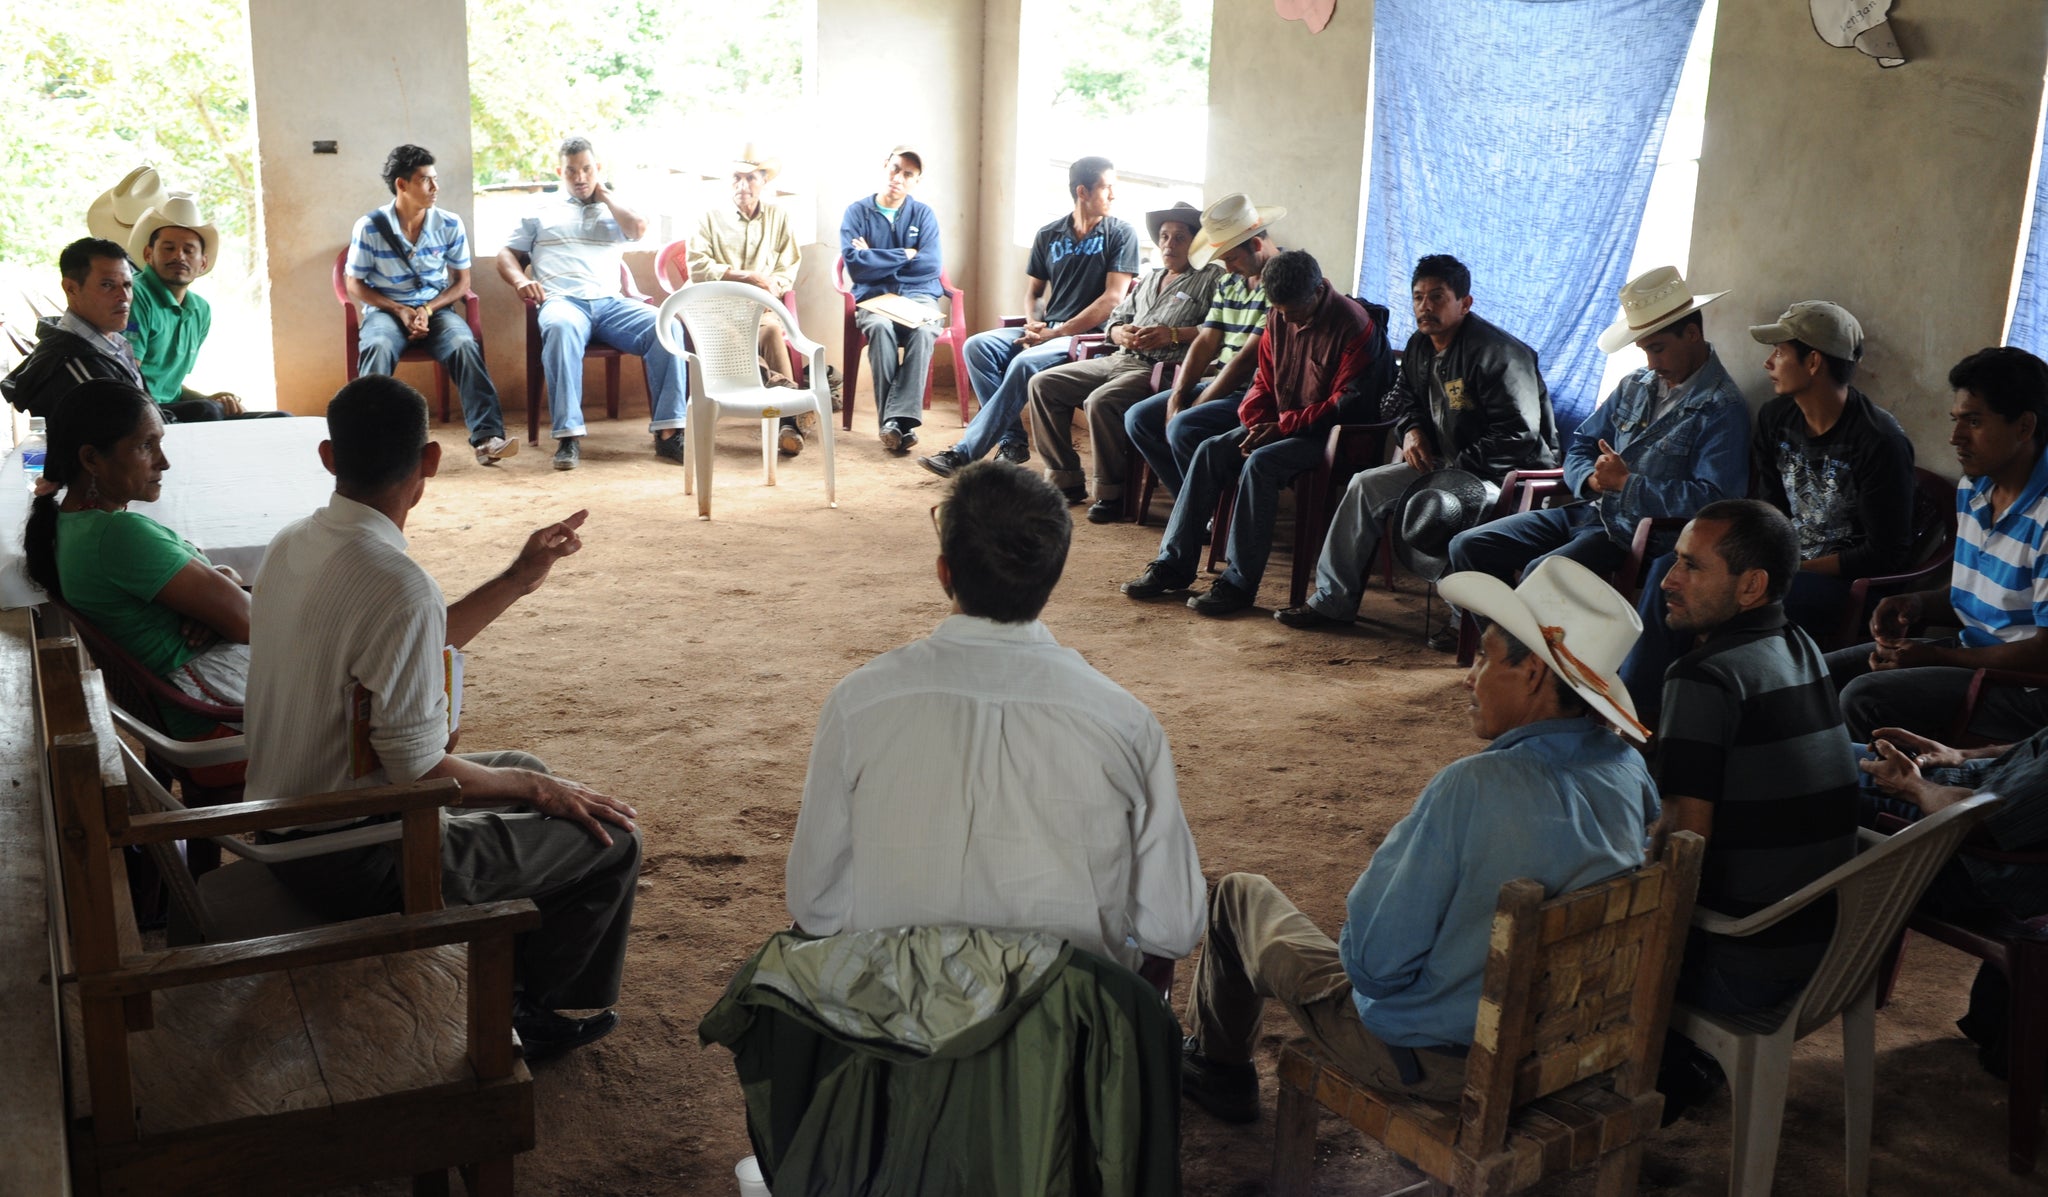 A Microloan meeting in La Union, Honduras with Aldea Development